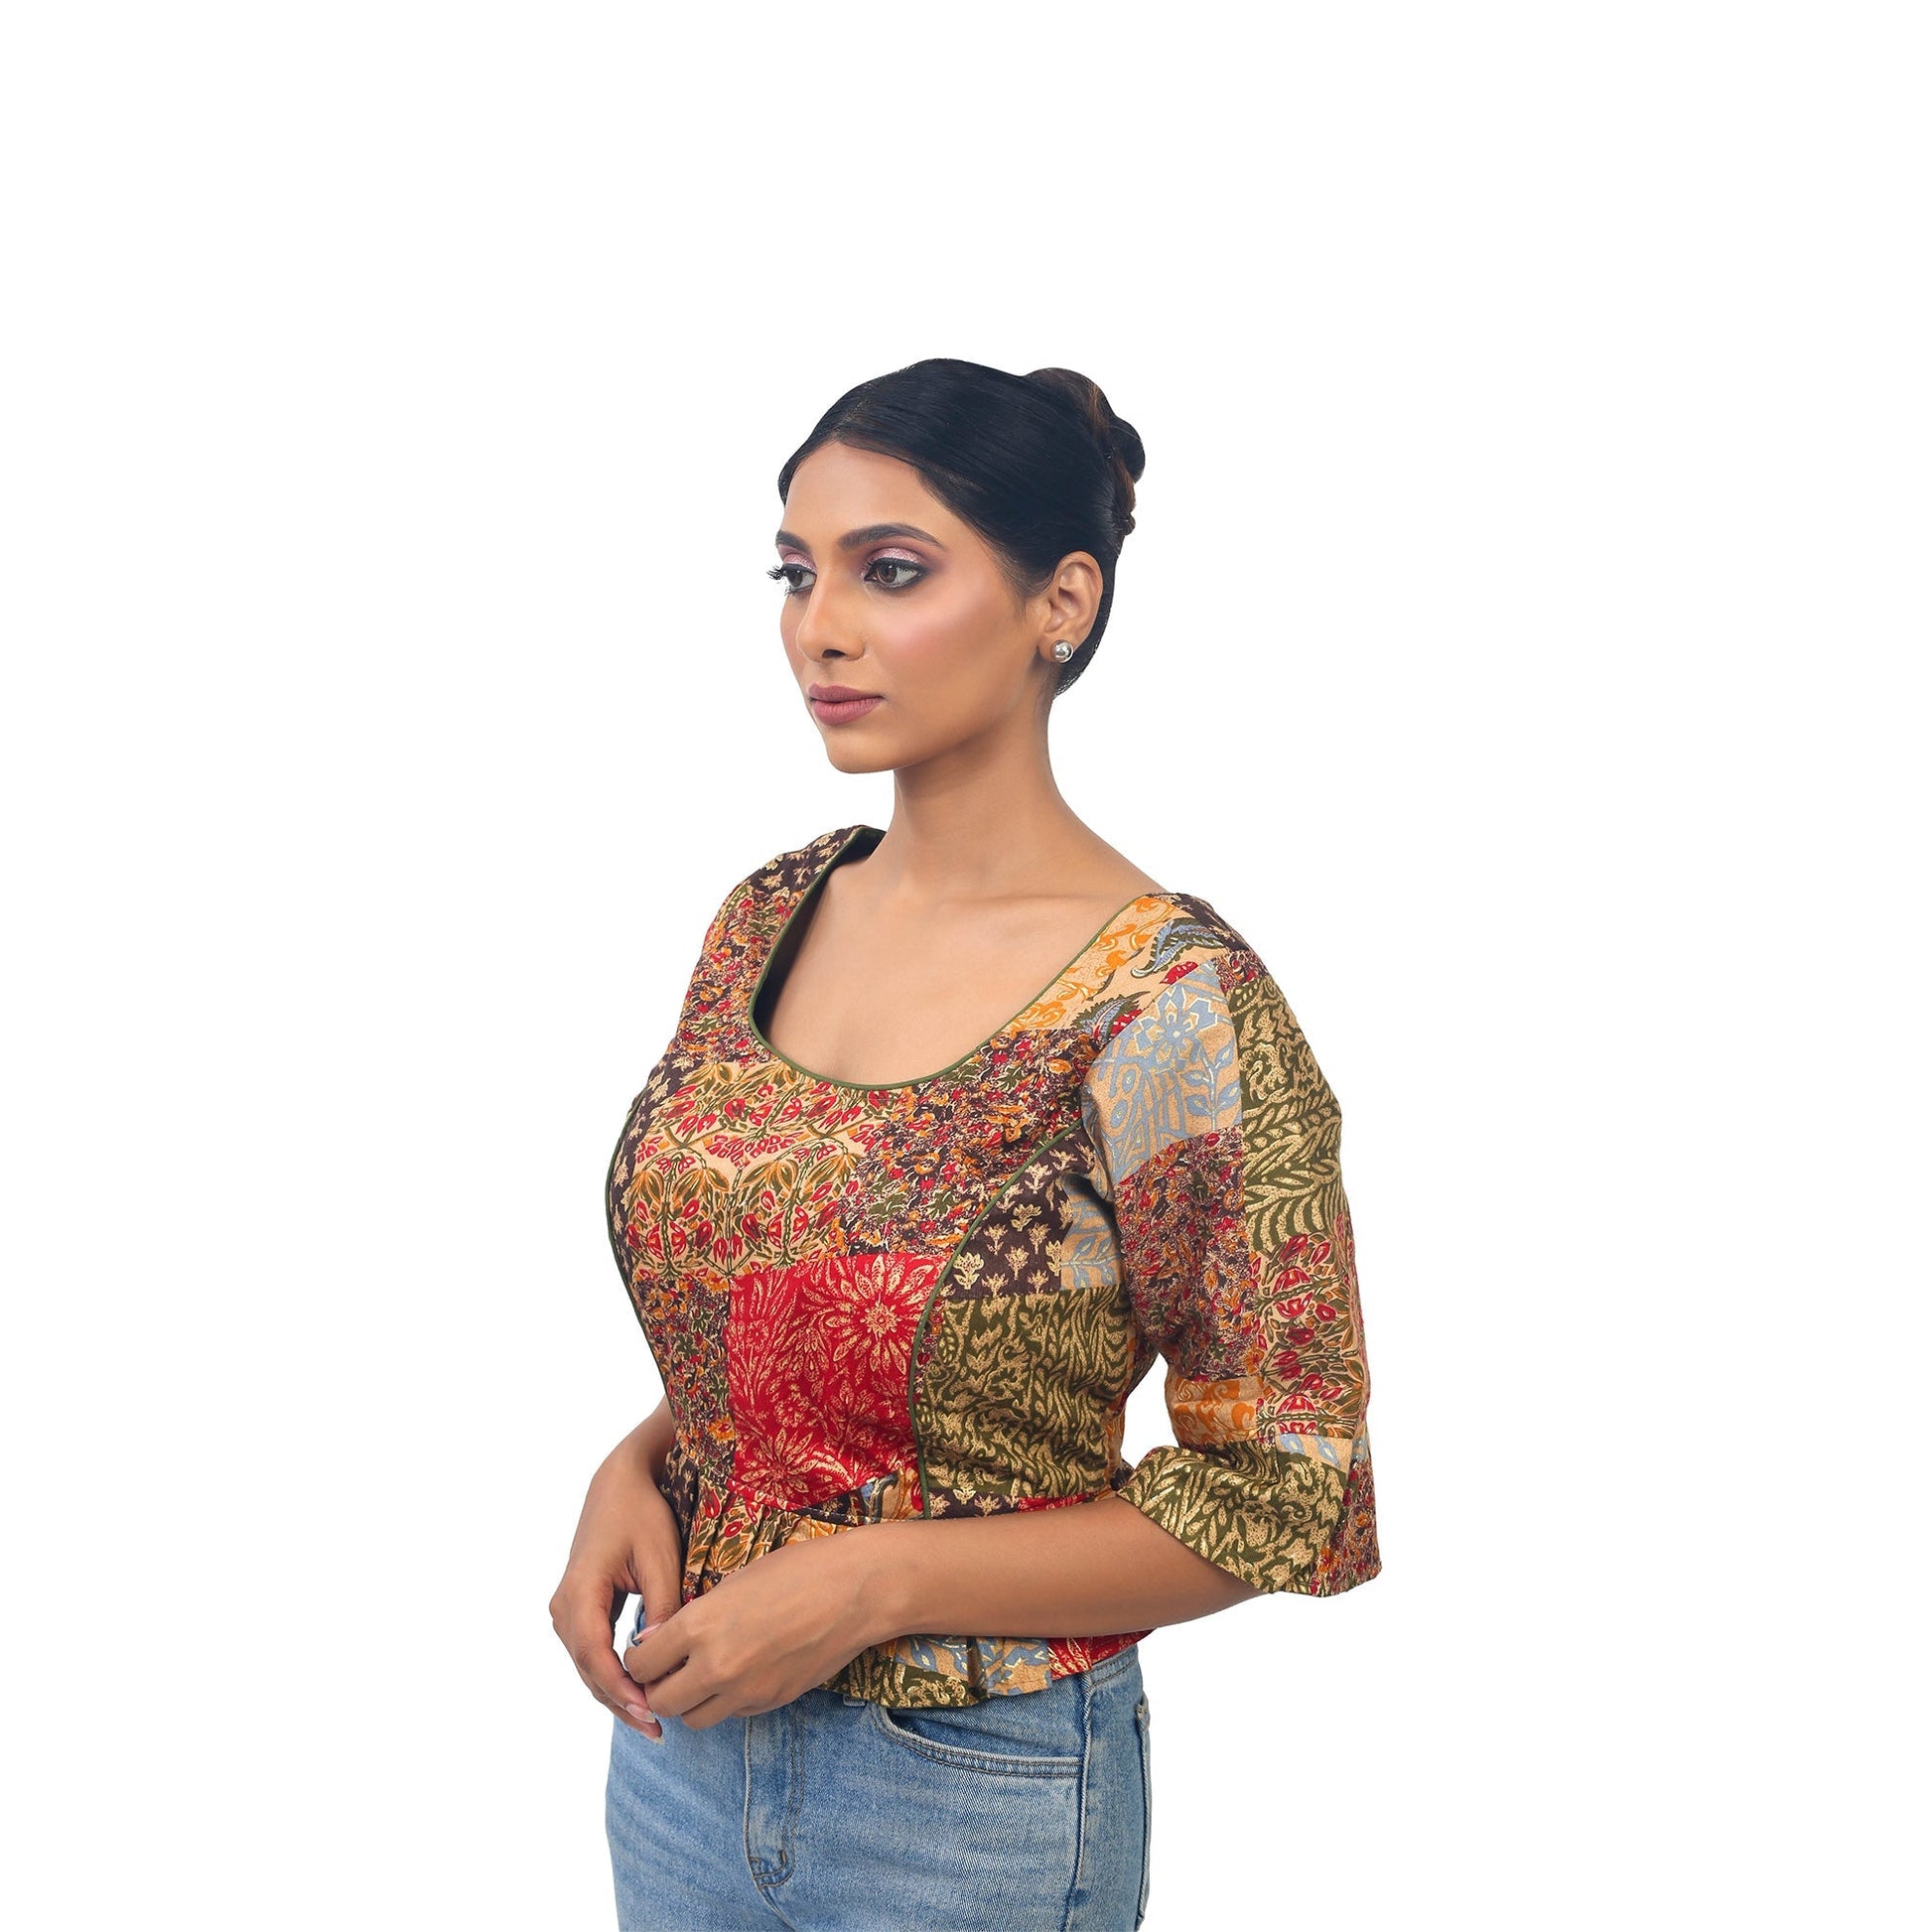 Digital print | Silk | Designer | Blouse 36 Apparel & Accessories 32 34 36 Blouse blouses Crop tops Digital thehangrdigital-print-silk-designer-blousethehangr-775850